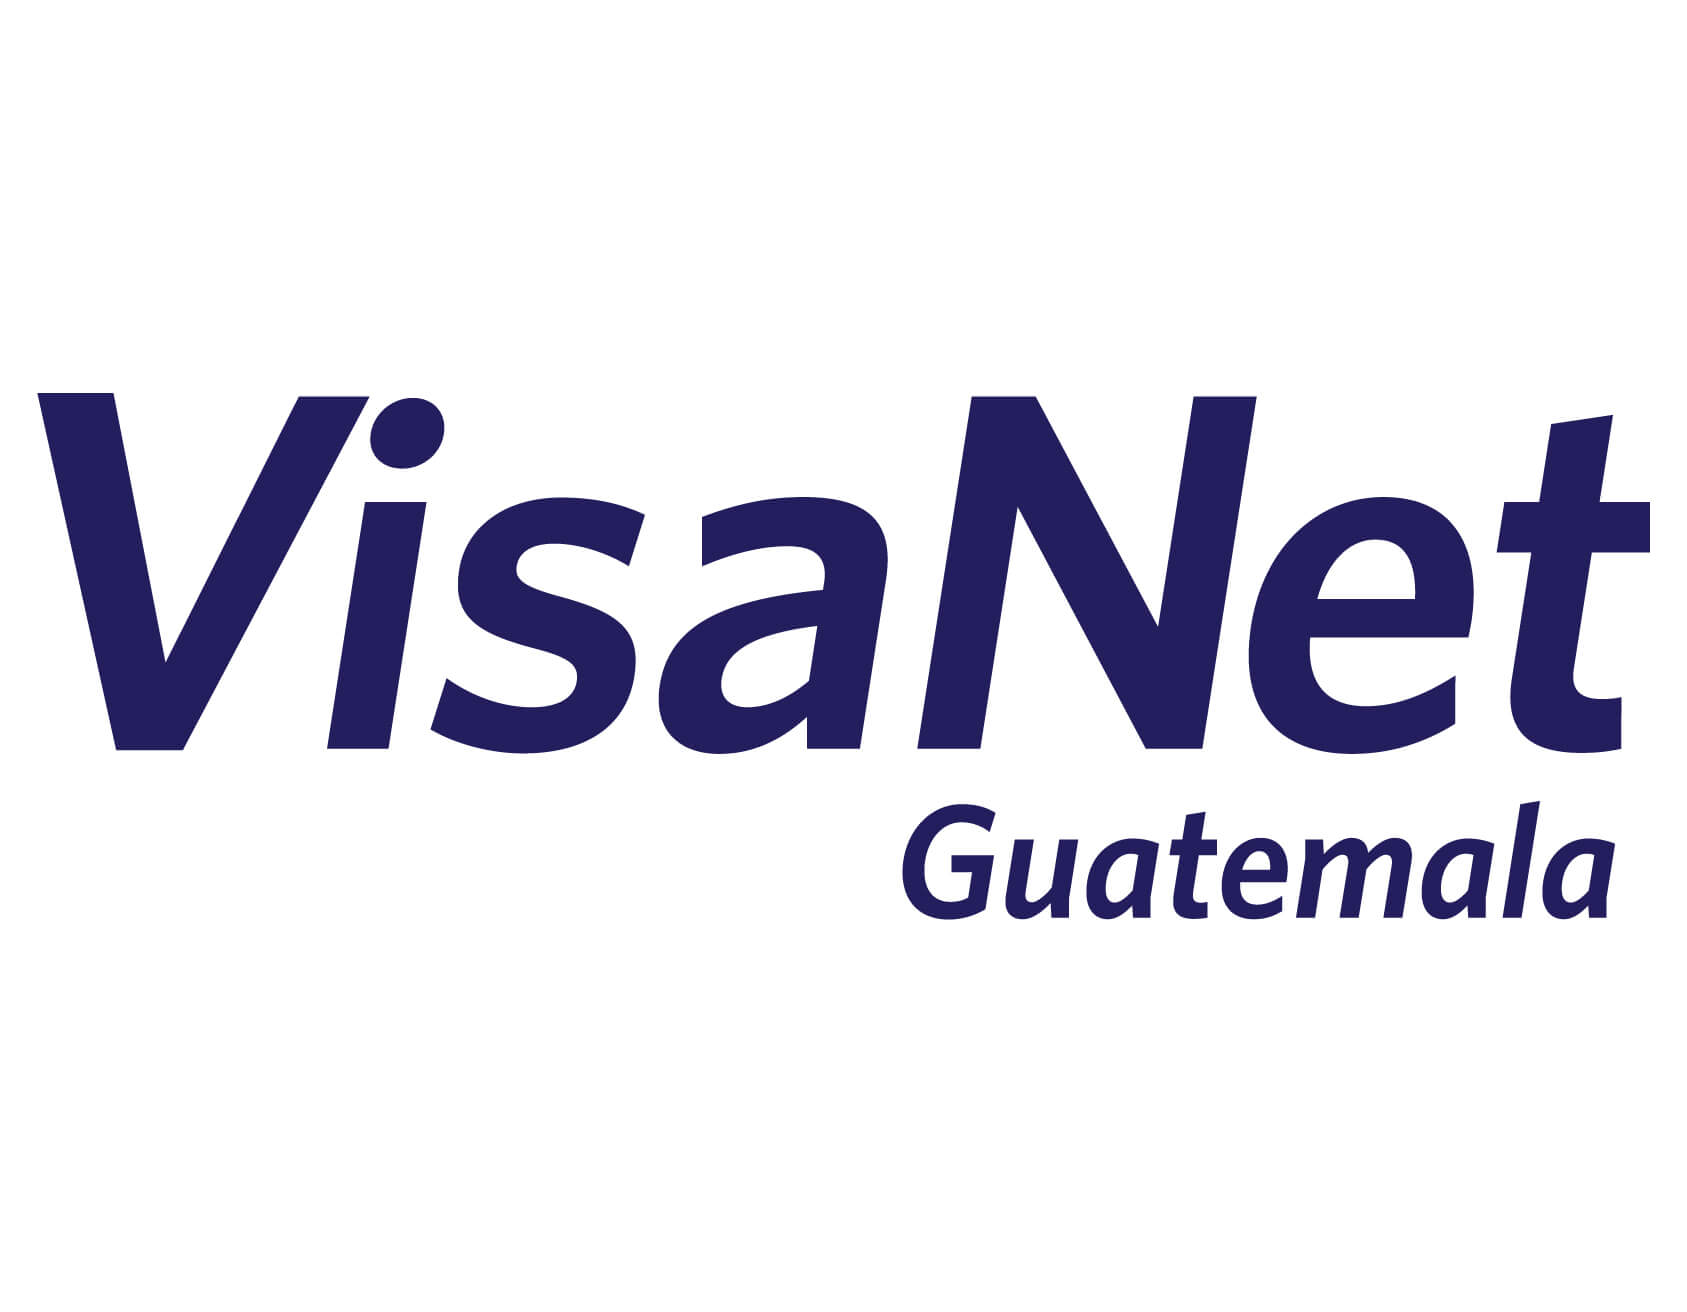 Visanet Guatemala